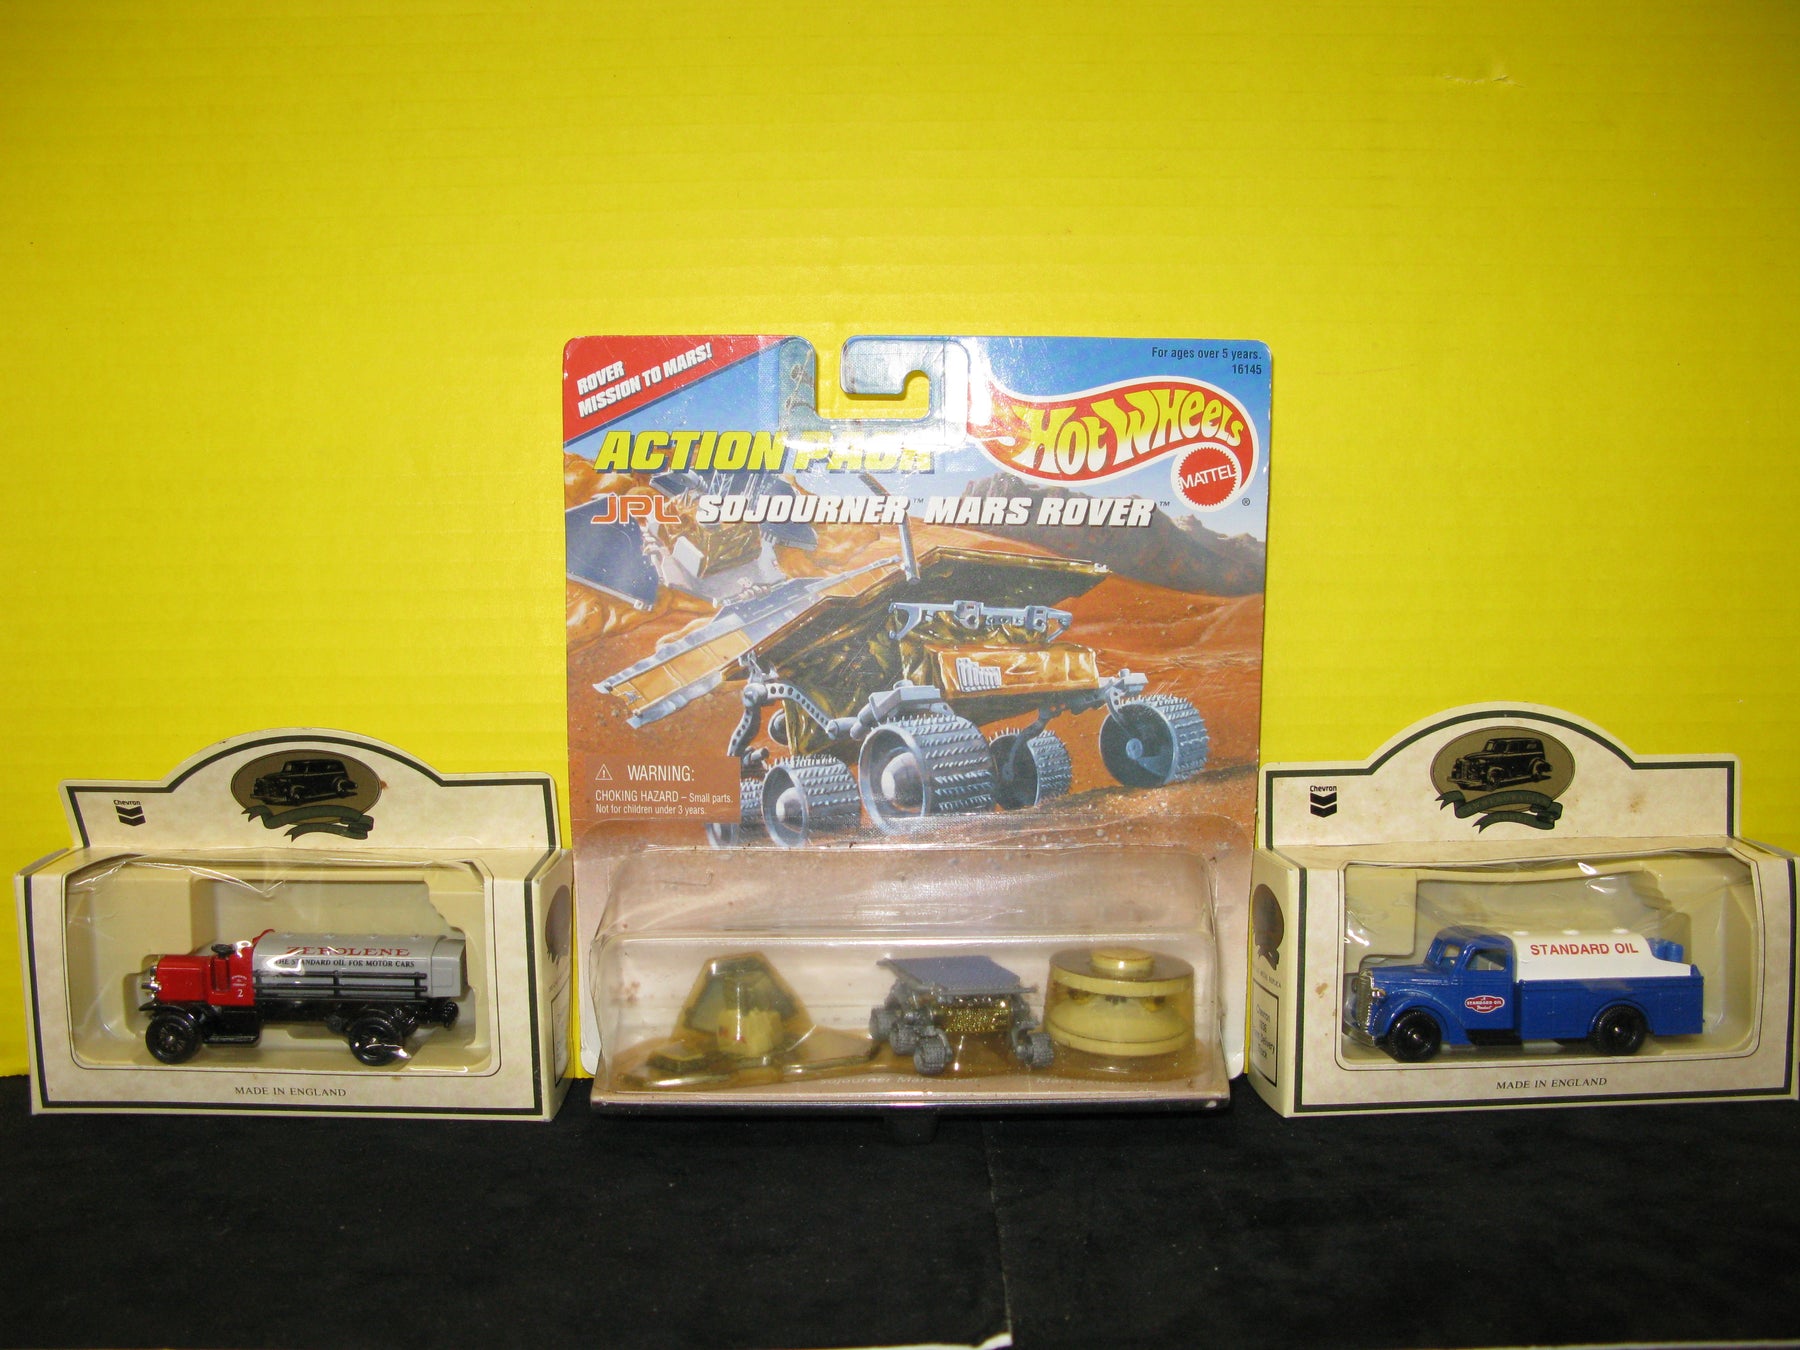 Hot Wheels Action Pack And Commemorative Model Standard Oil Trucks